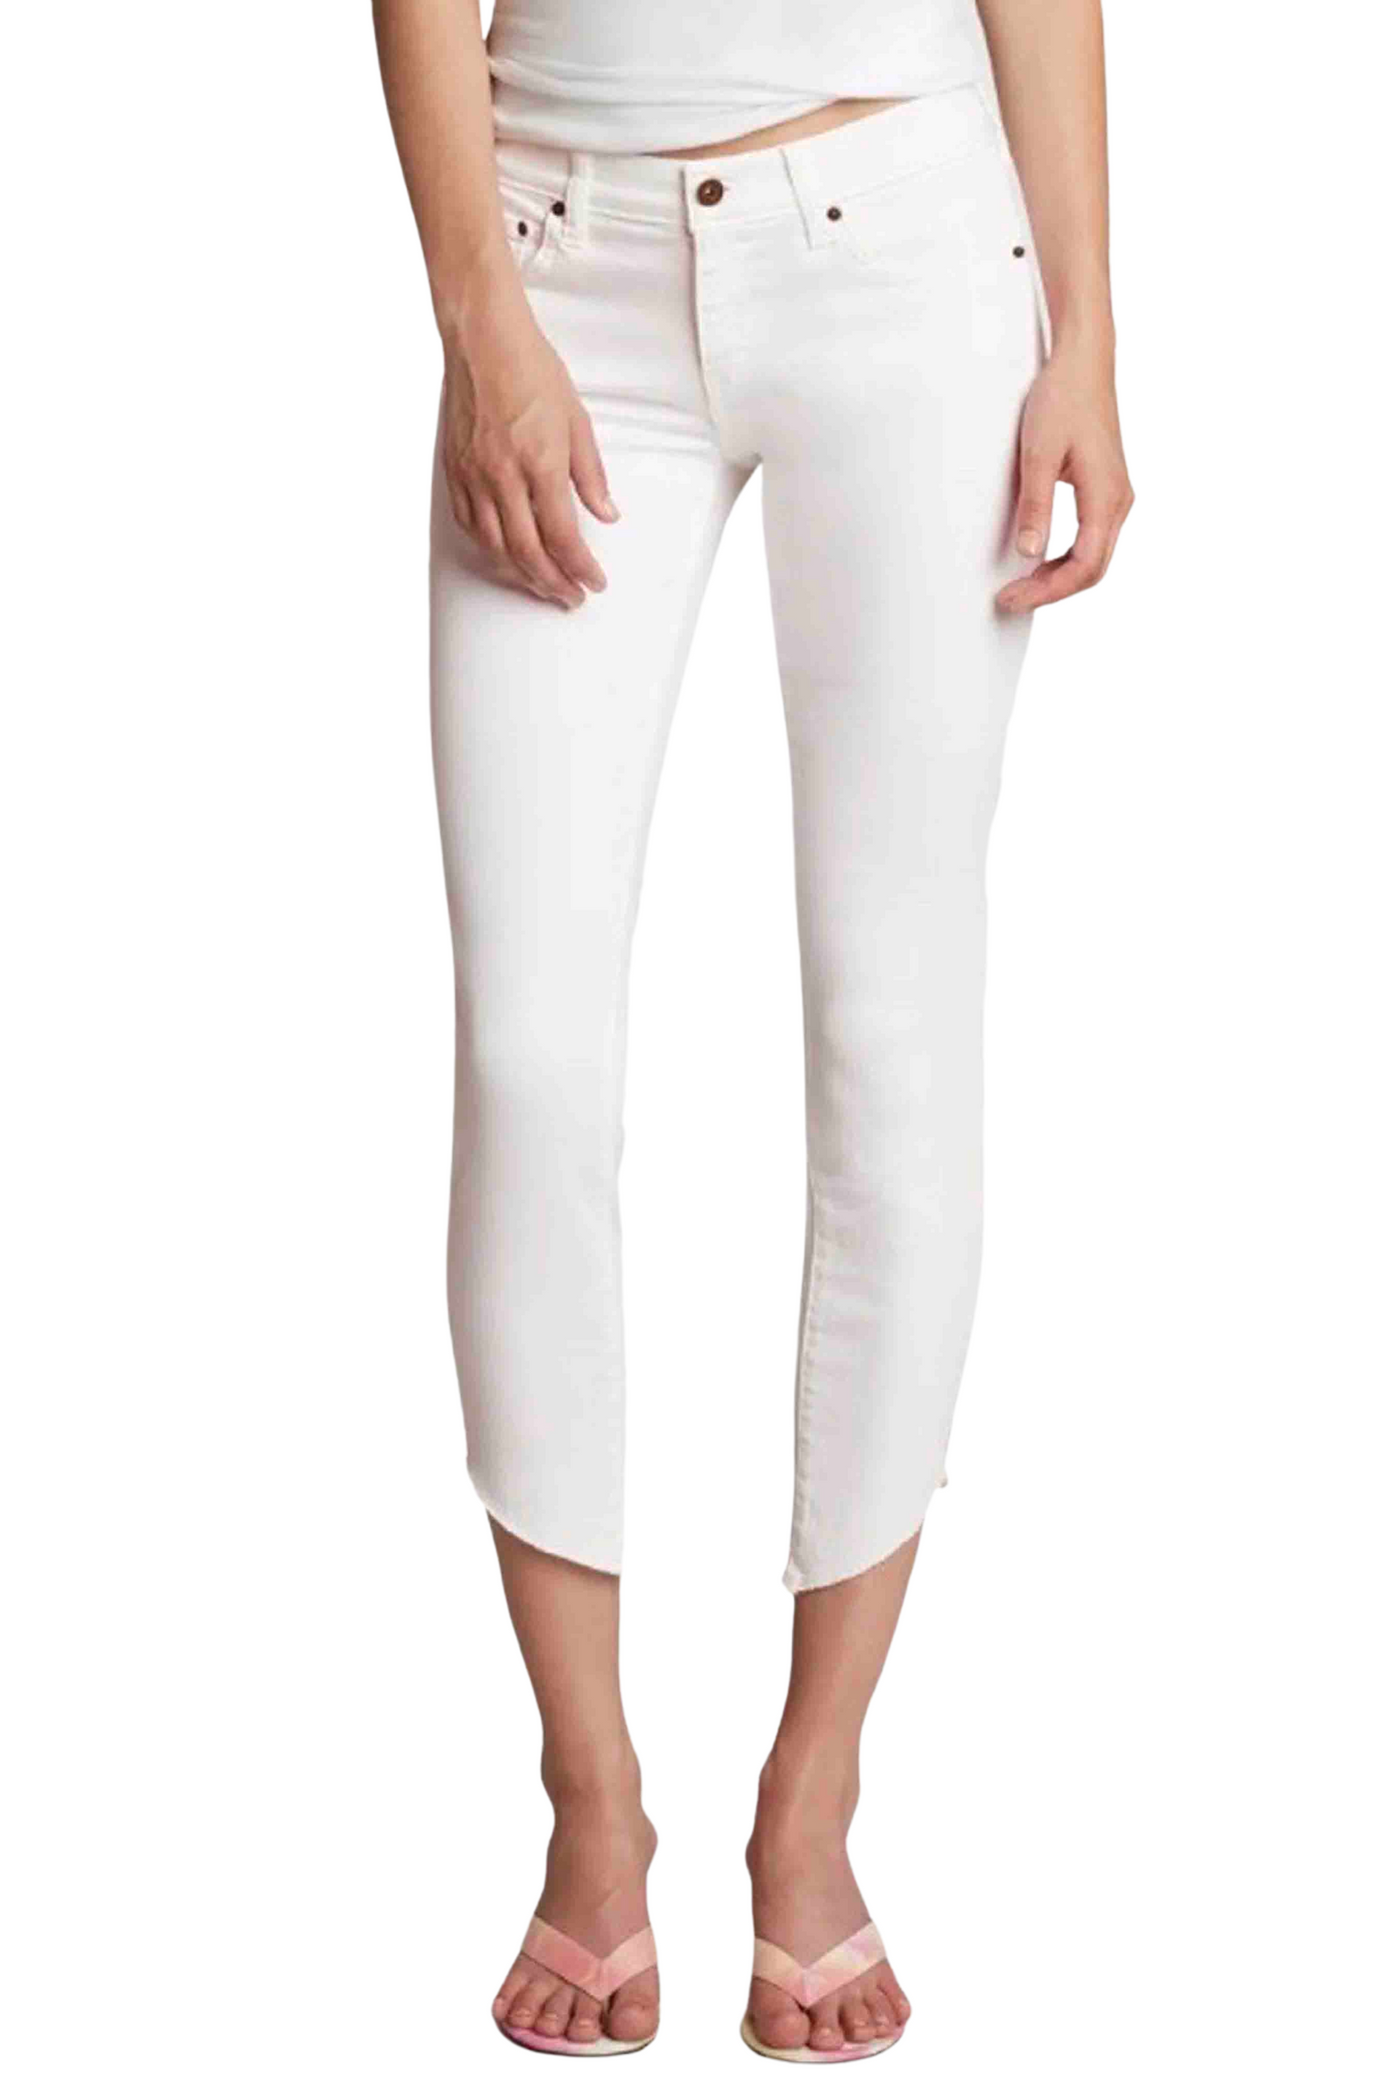 White Mid-Rise Skinny Jean by Principle Denim with asymmetrical raw hemline